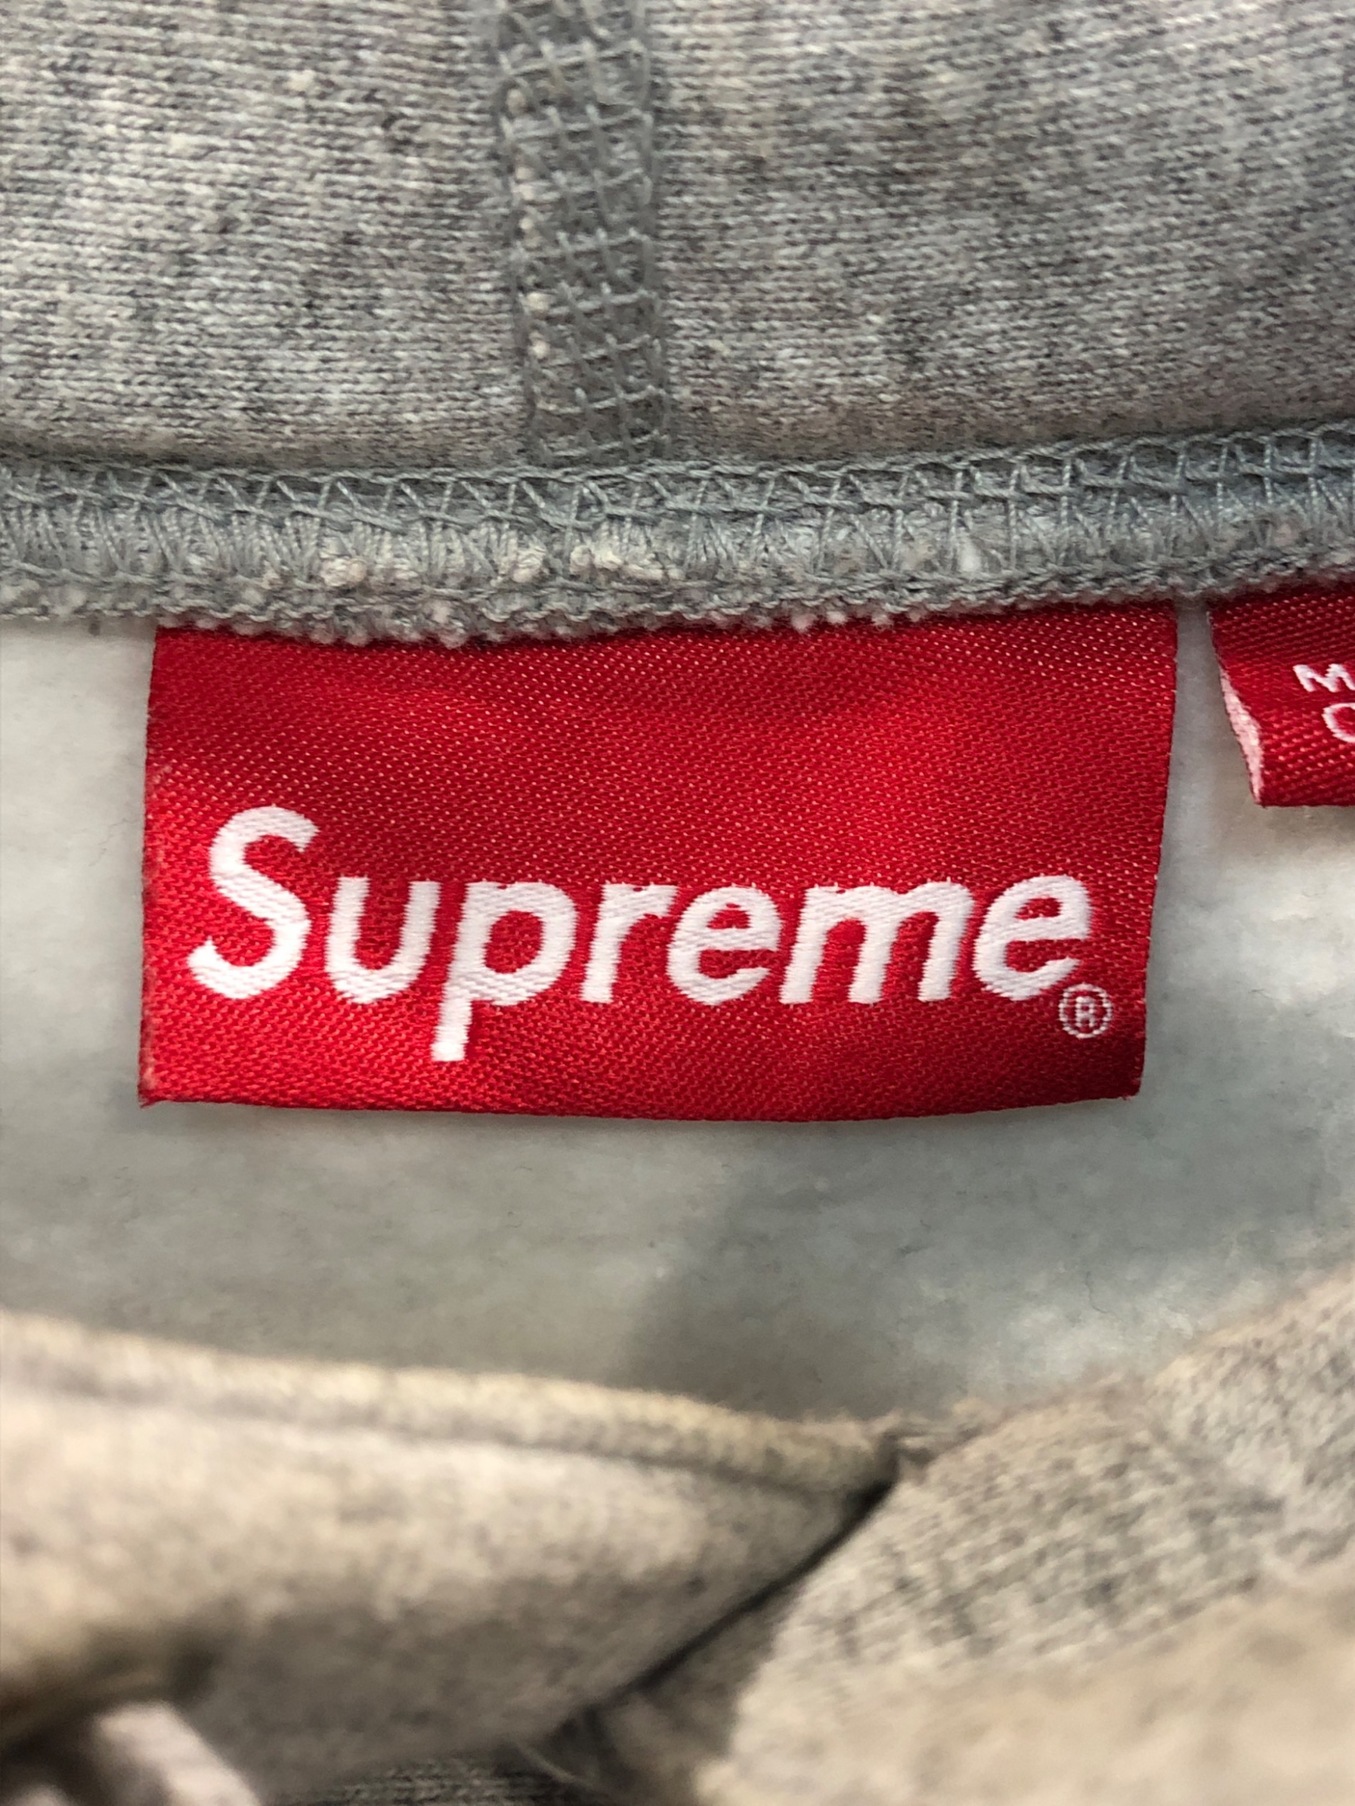 supreme bandana box logo hoodie グレーMサイズ